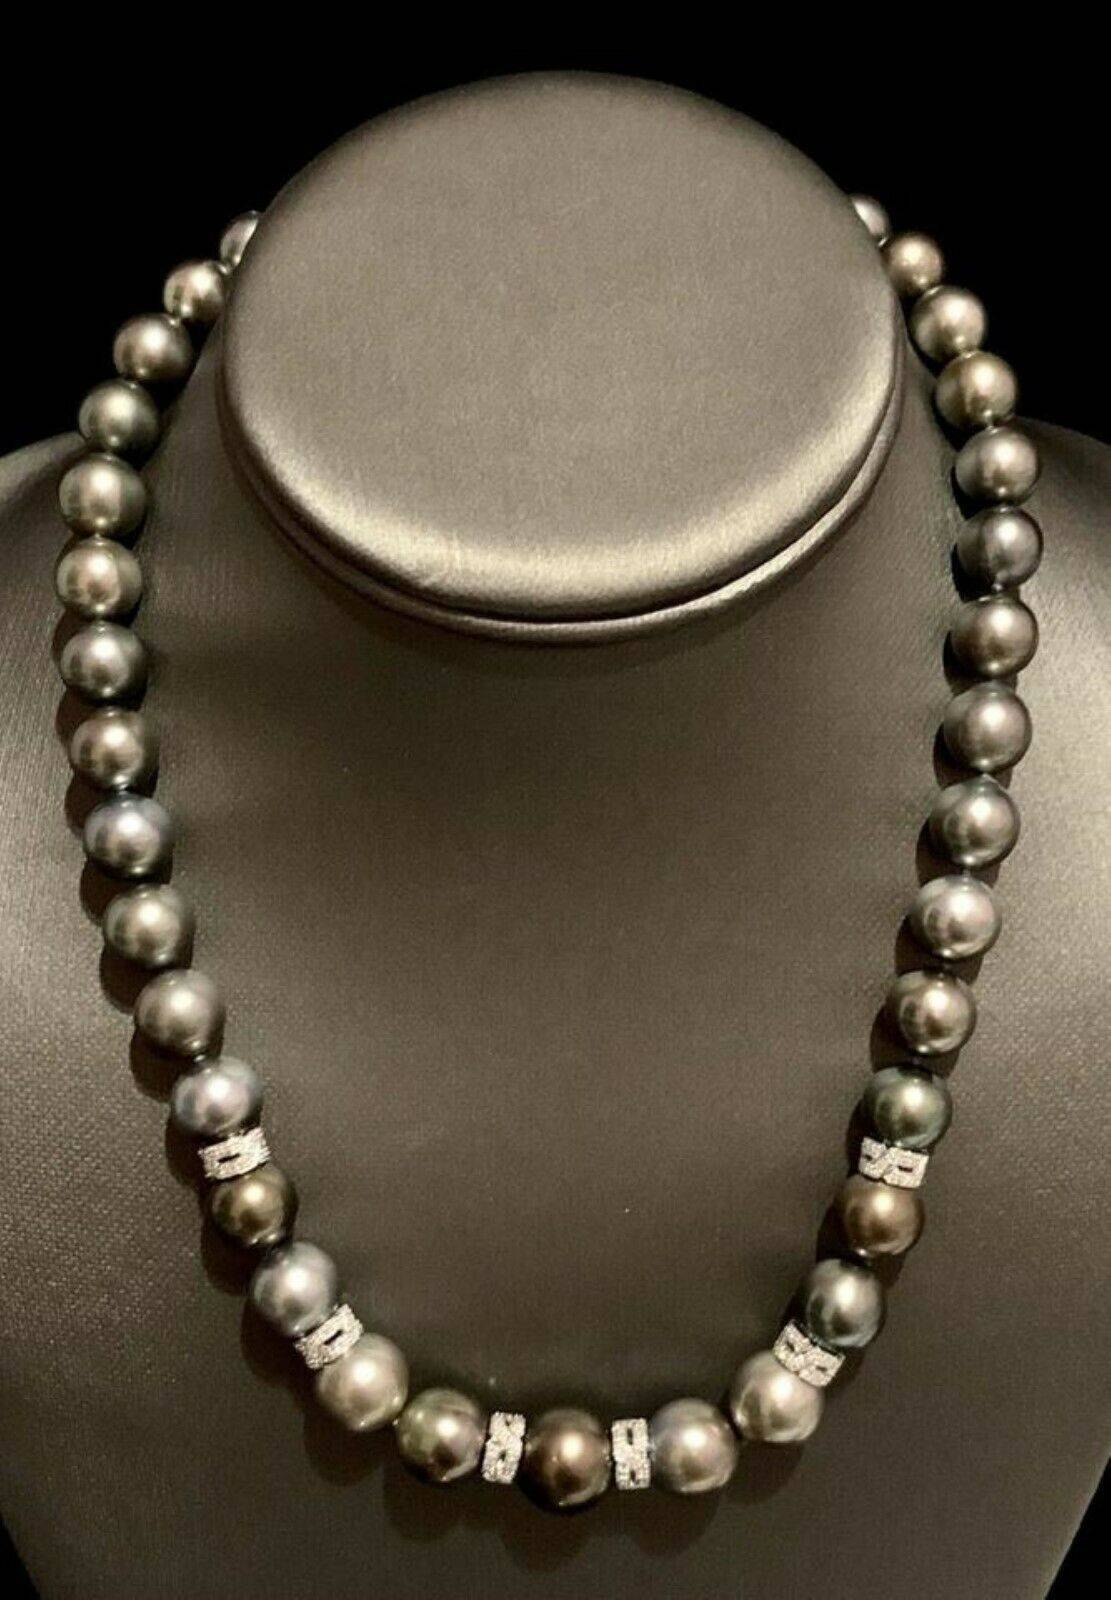 Diamond Tahitian Pearl Necklace 18k Gold 12.9 mm 18" Certified $12,250 821384 - Certified Fine Jewelry